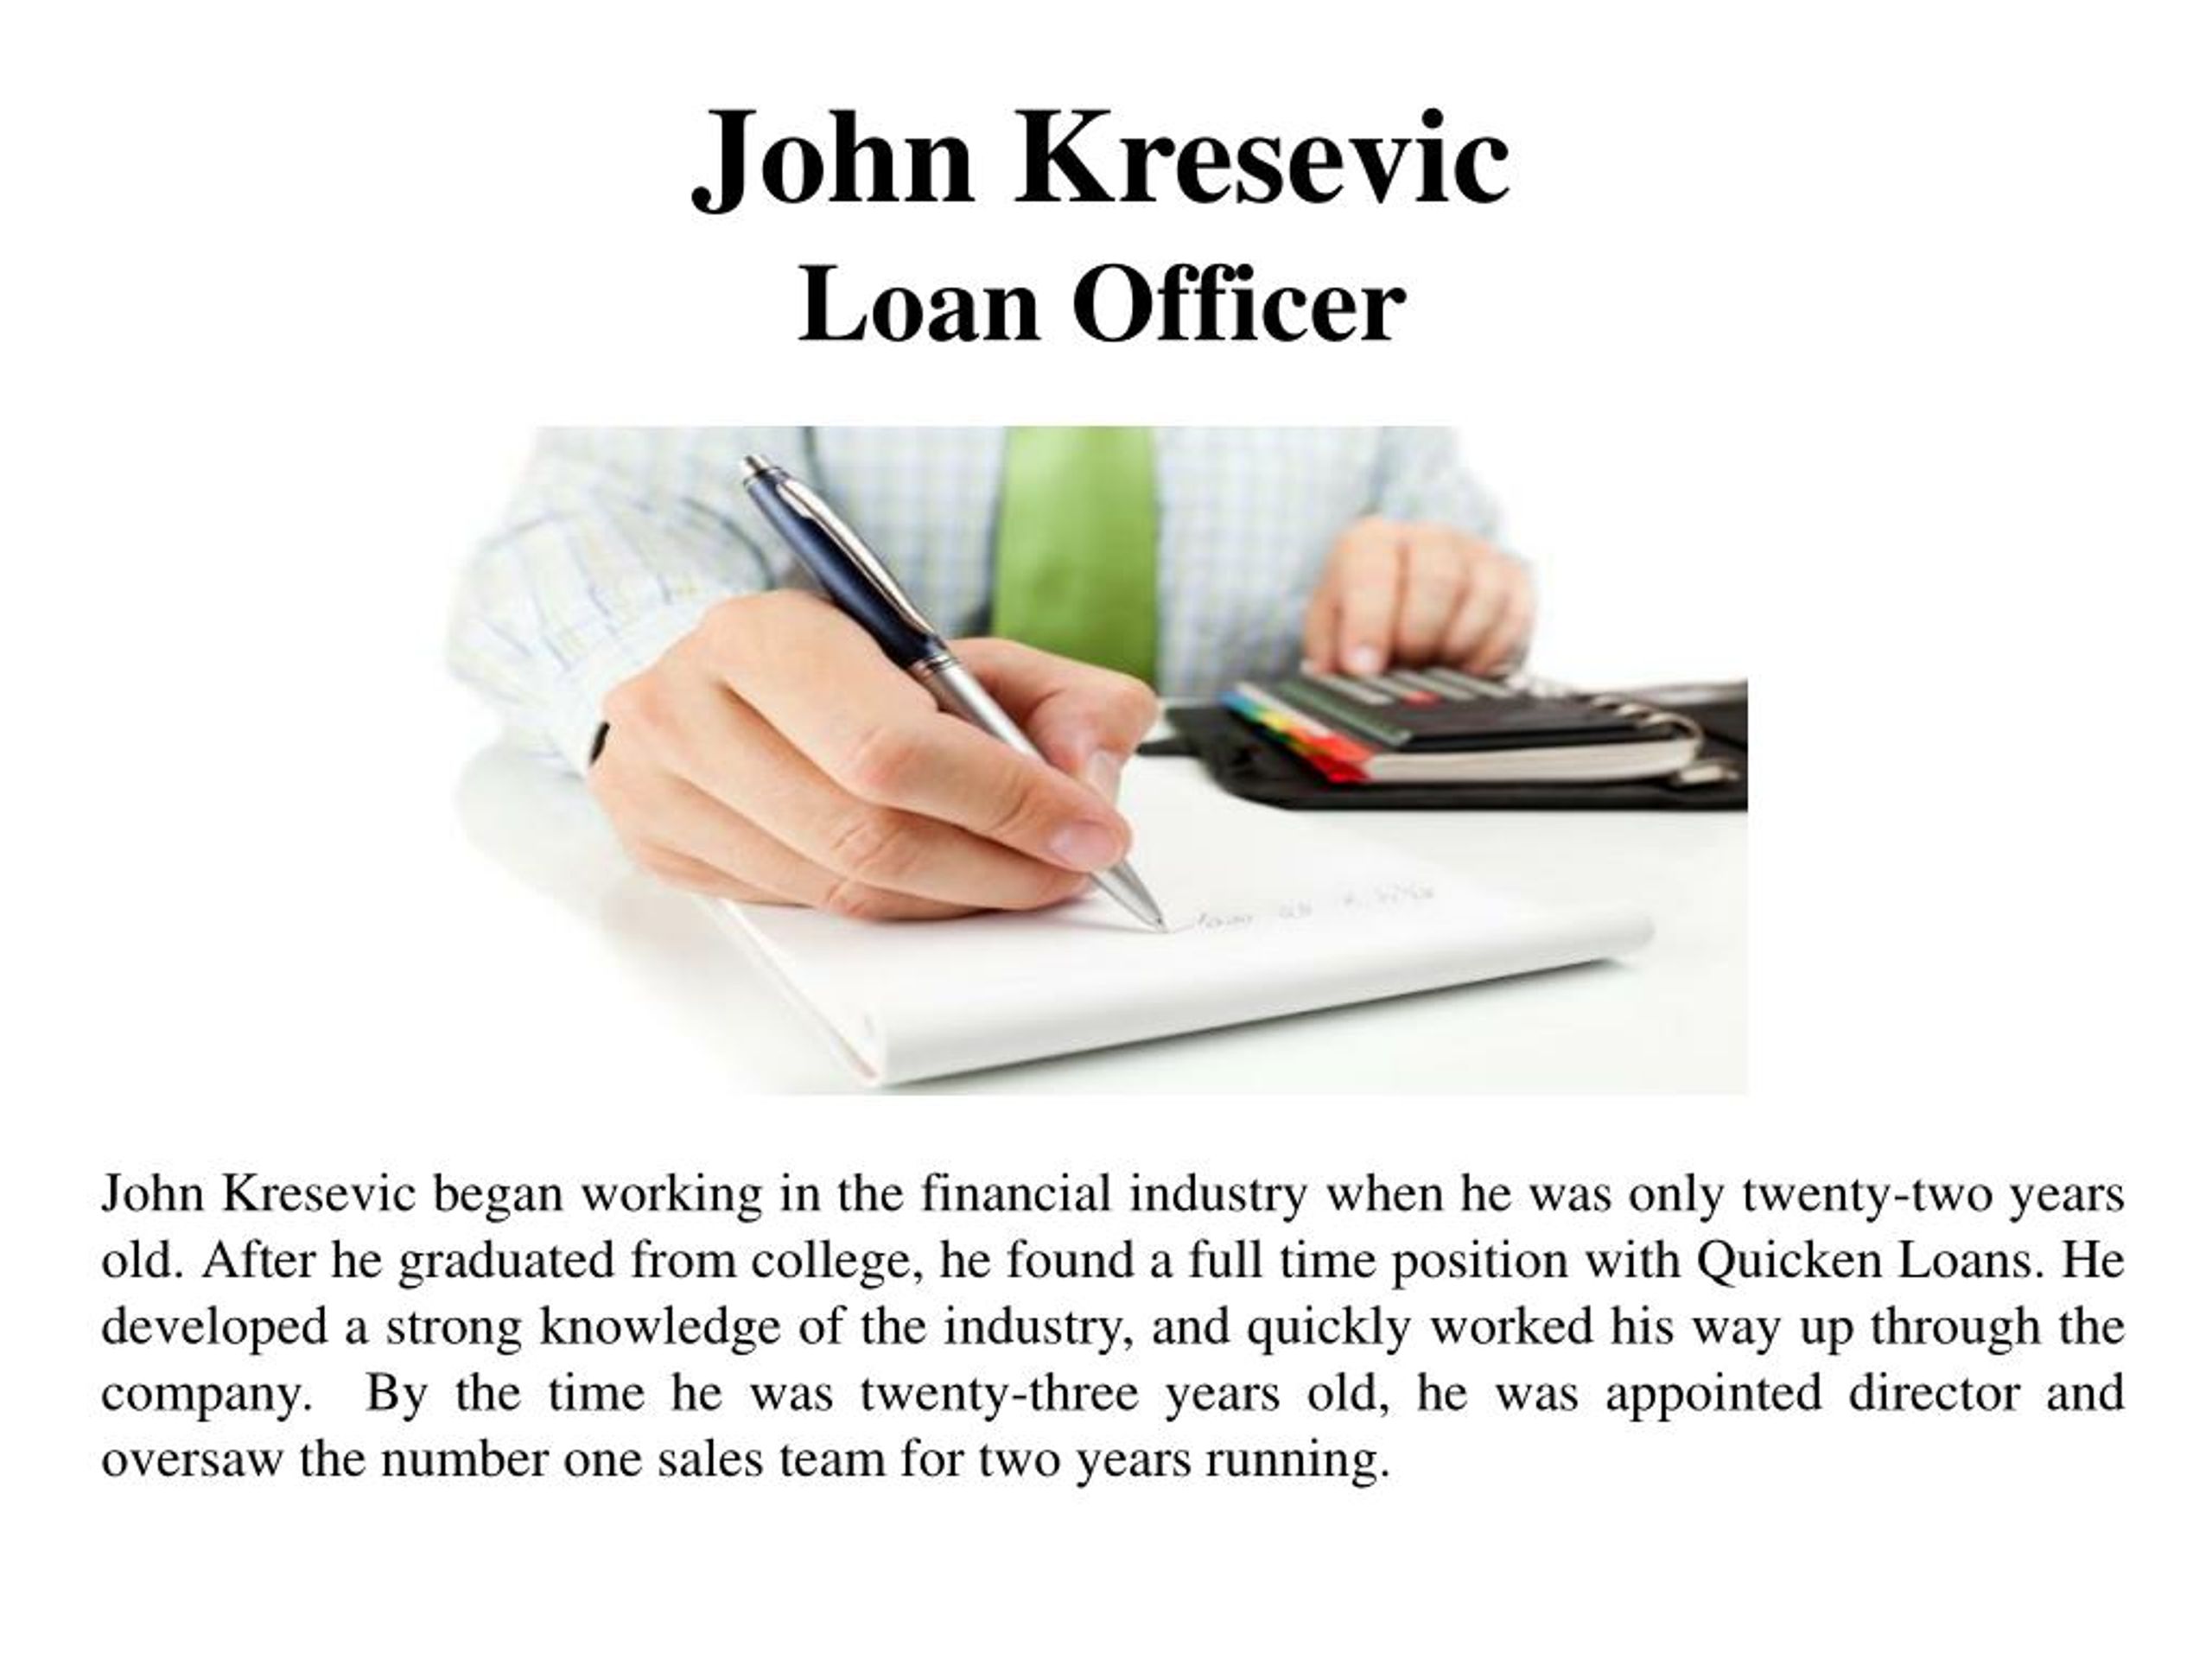 Ppt John Kresevic Loan Officer Powerpoint Presentation Free